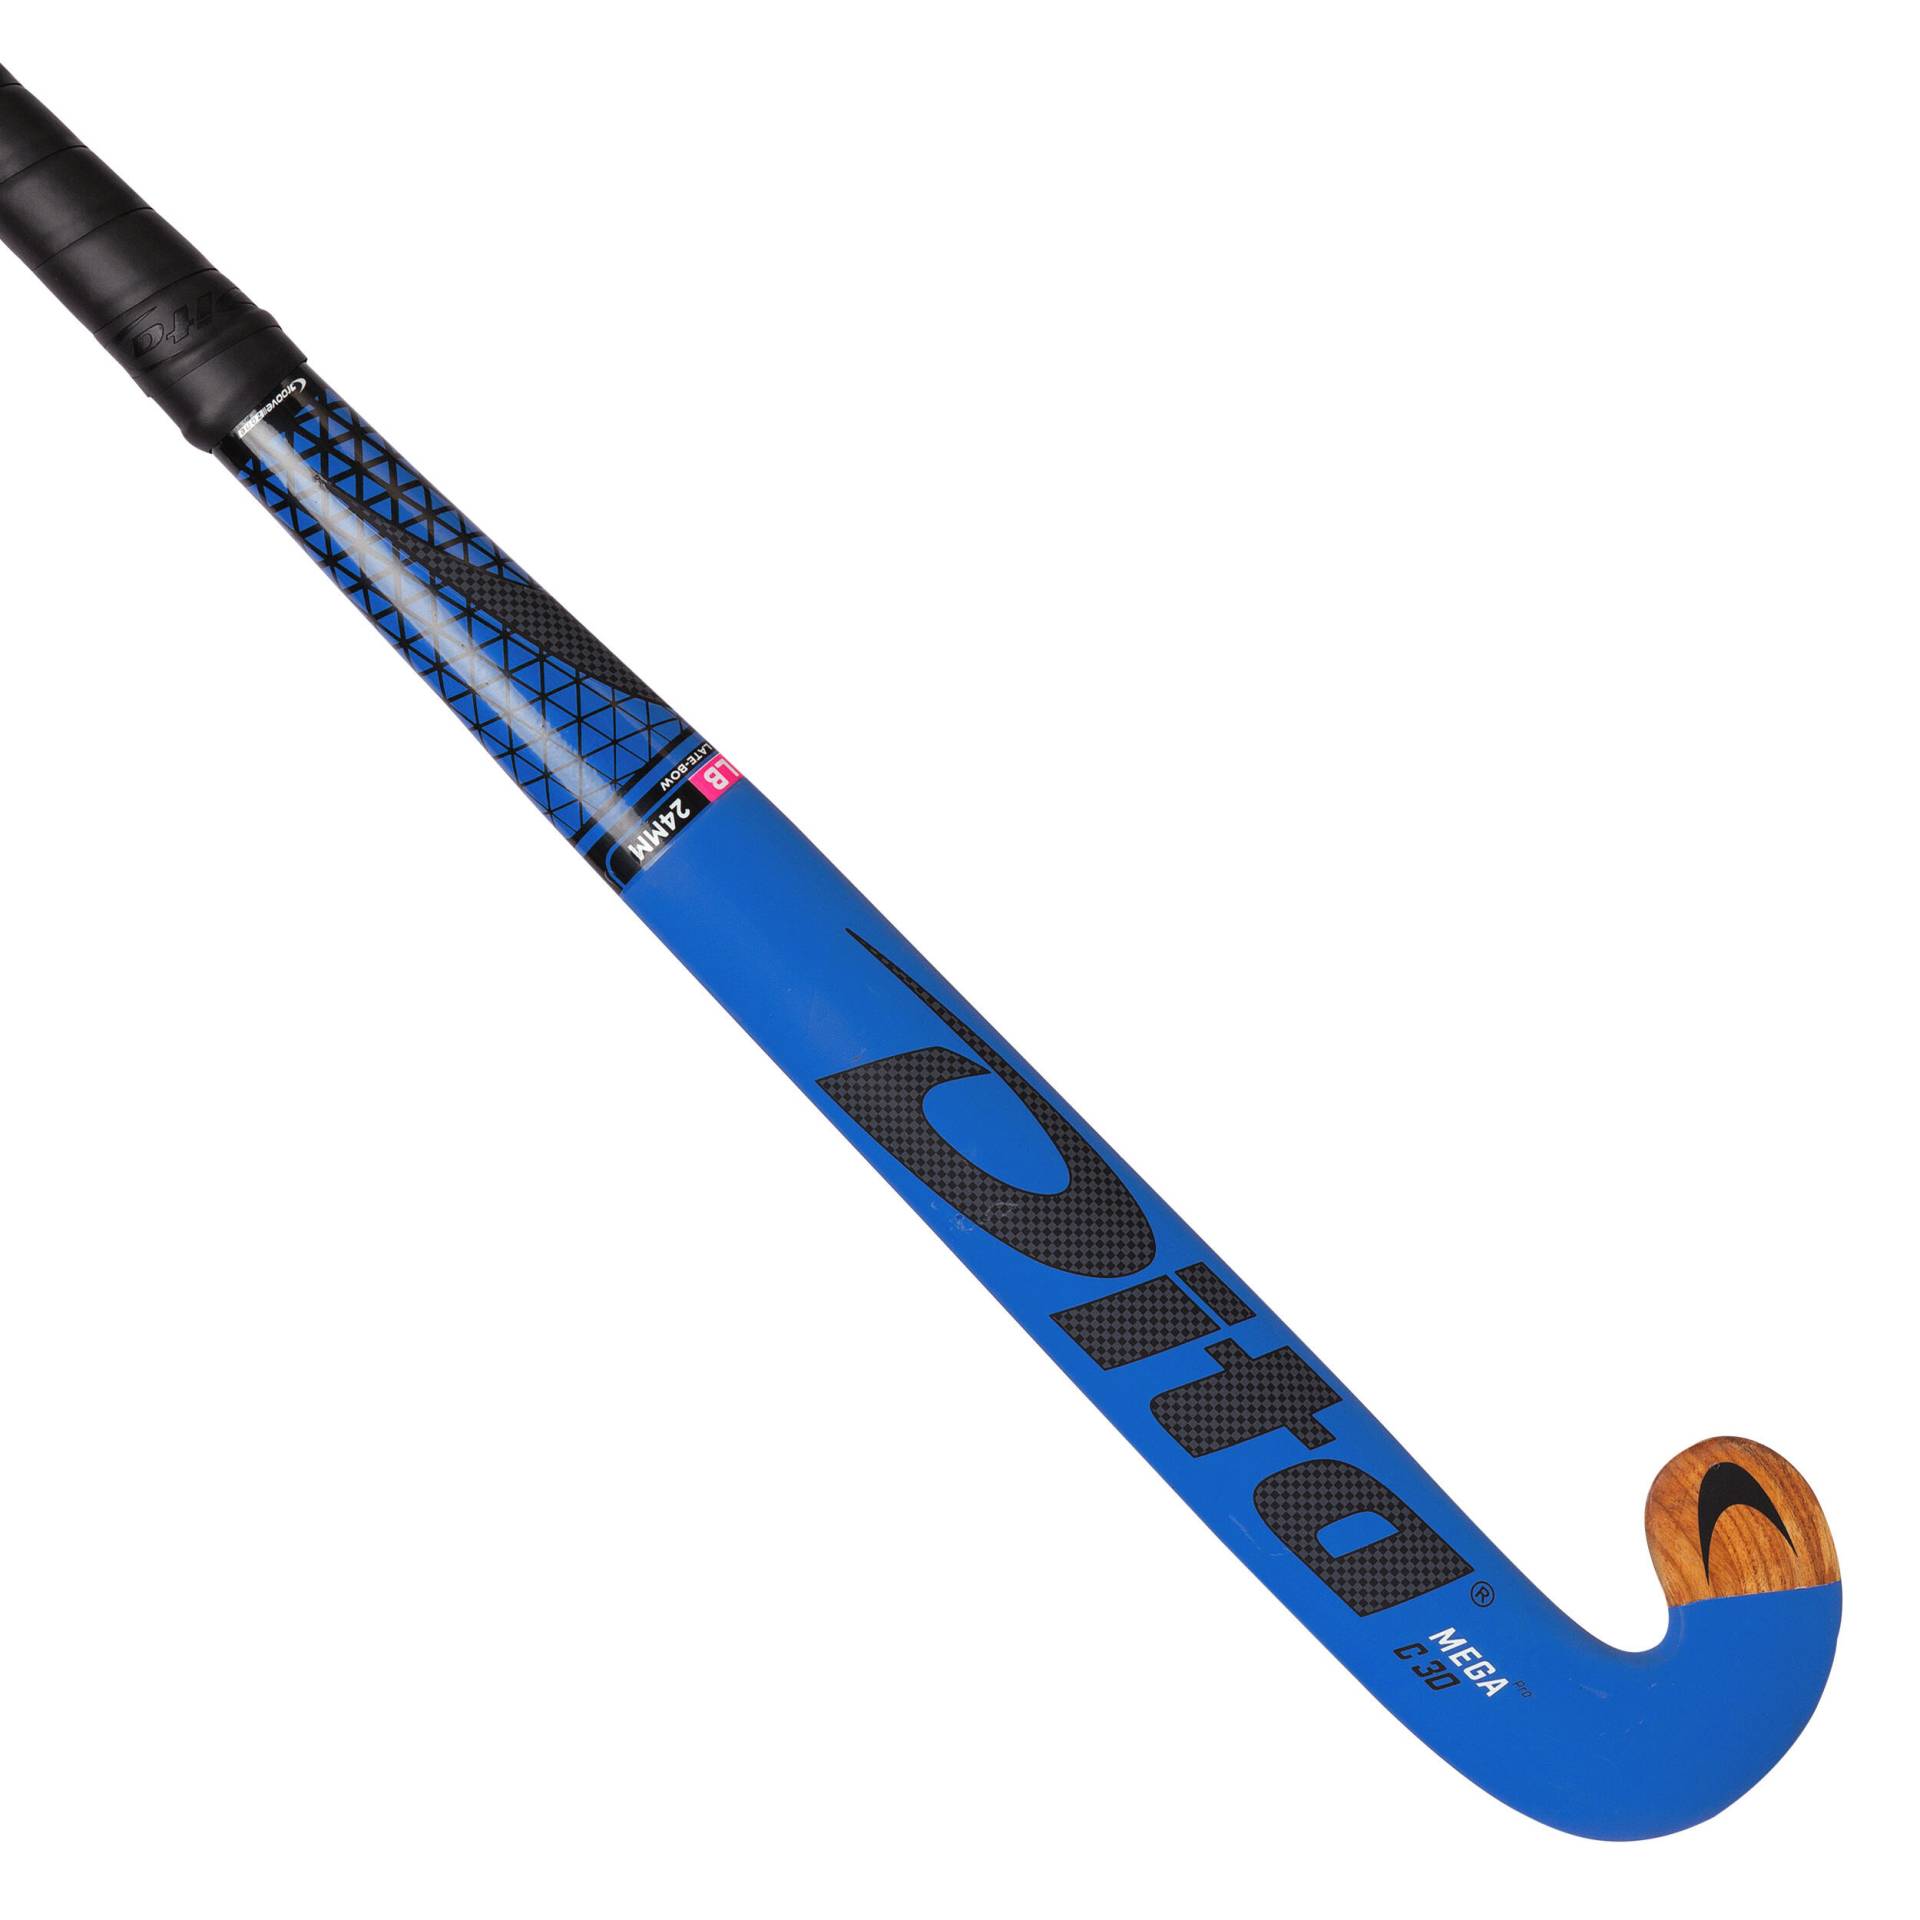 Damen/Herren Feldhockey Schläger Indoor - Megapro Wood C30 LB Damen/Herren blau von Dita